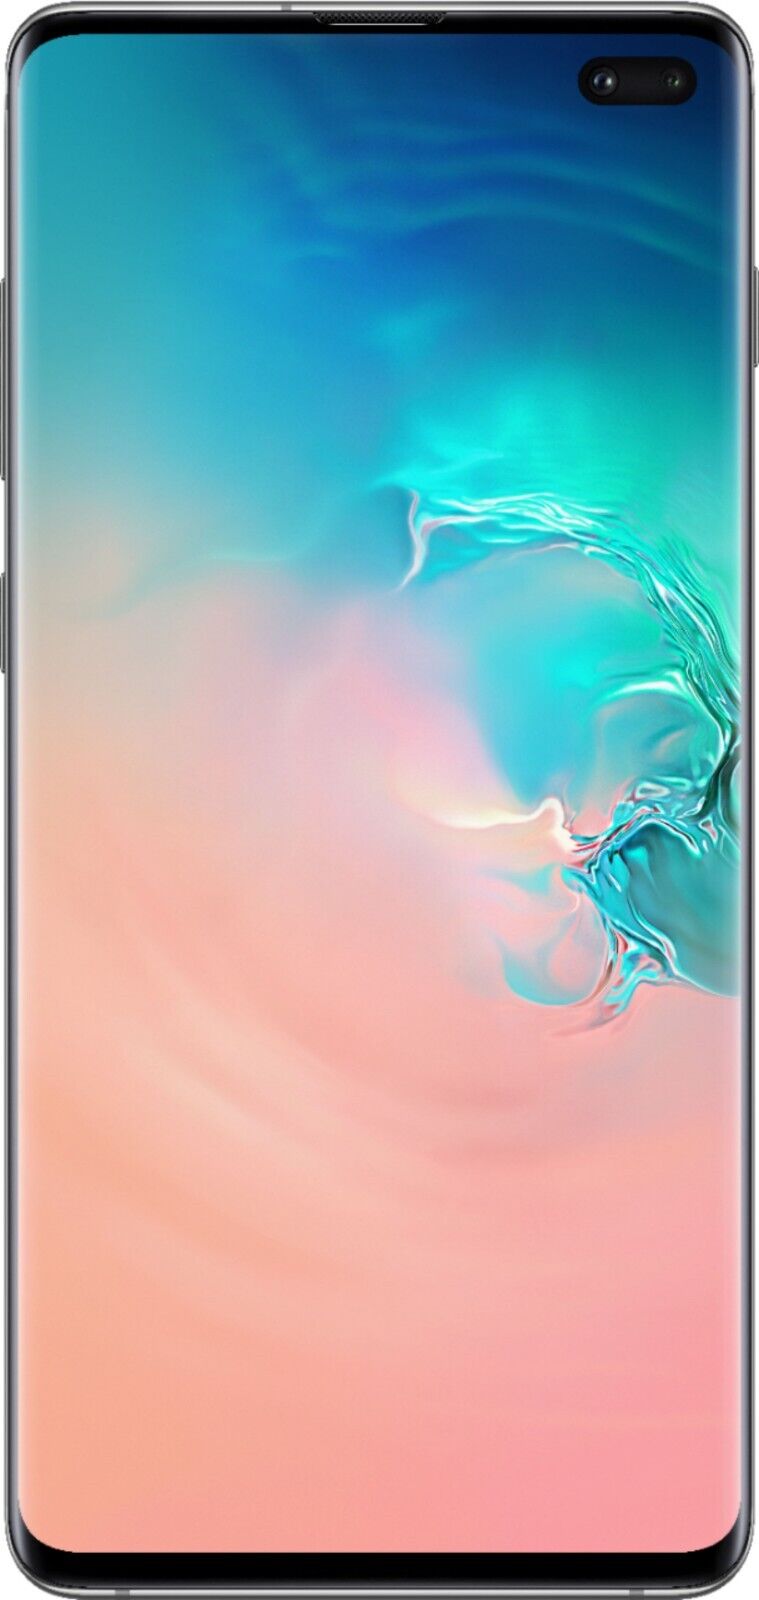 Galaxy S10+ 128GB - Prism White - Fully unlocked (GSM & CDMA)